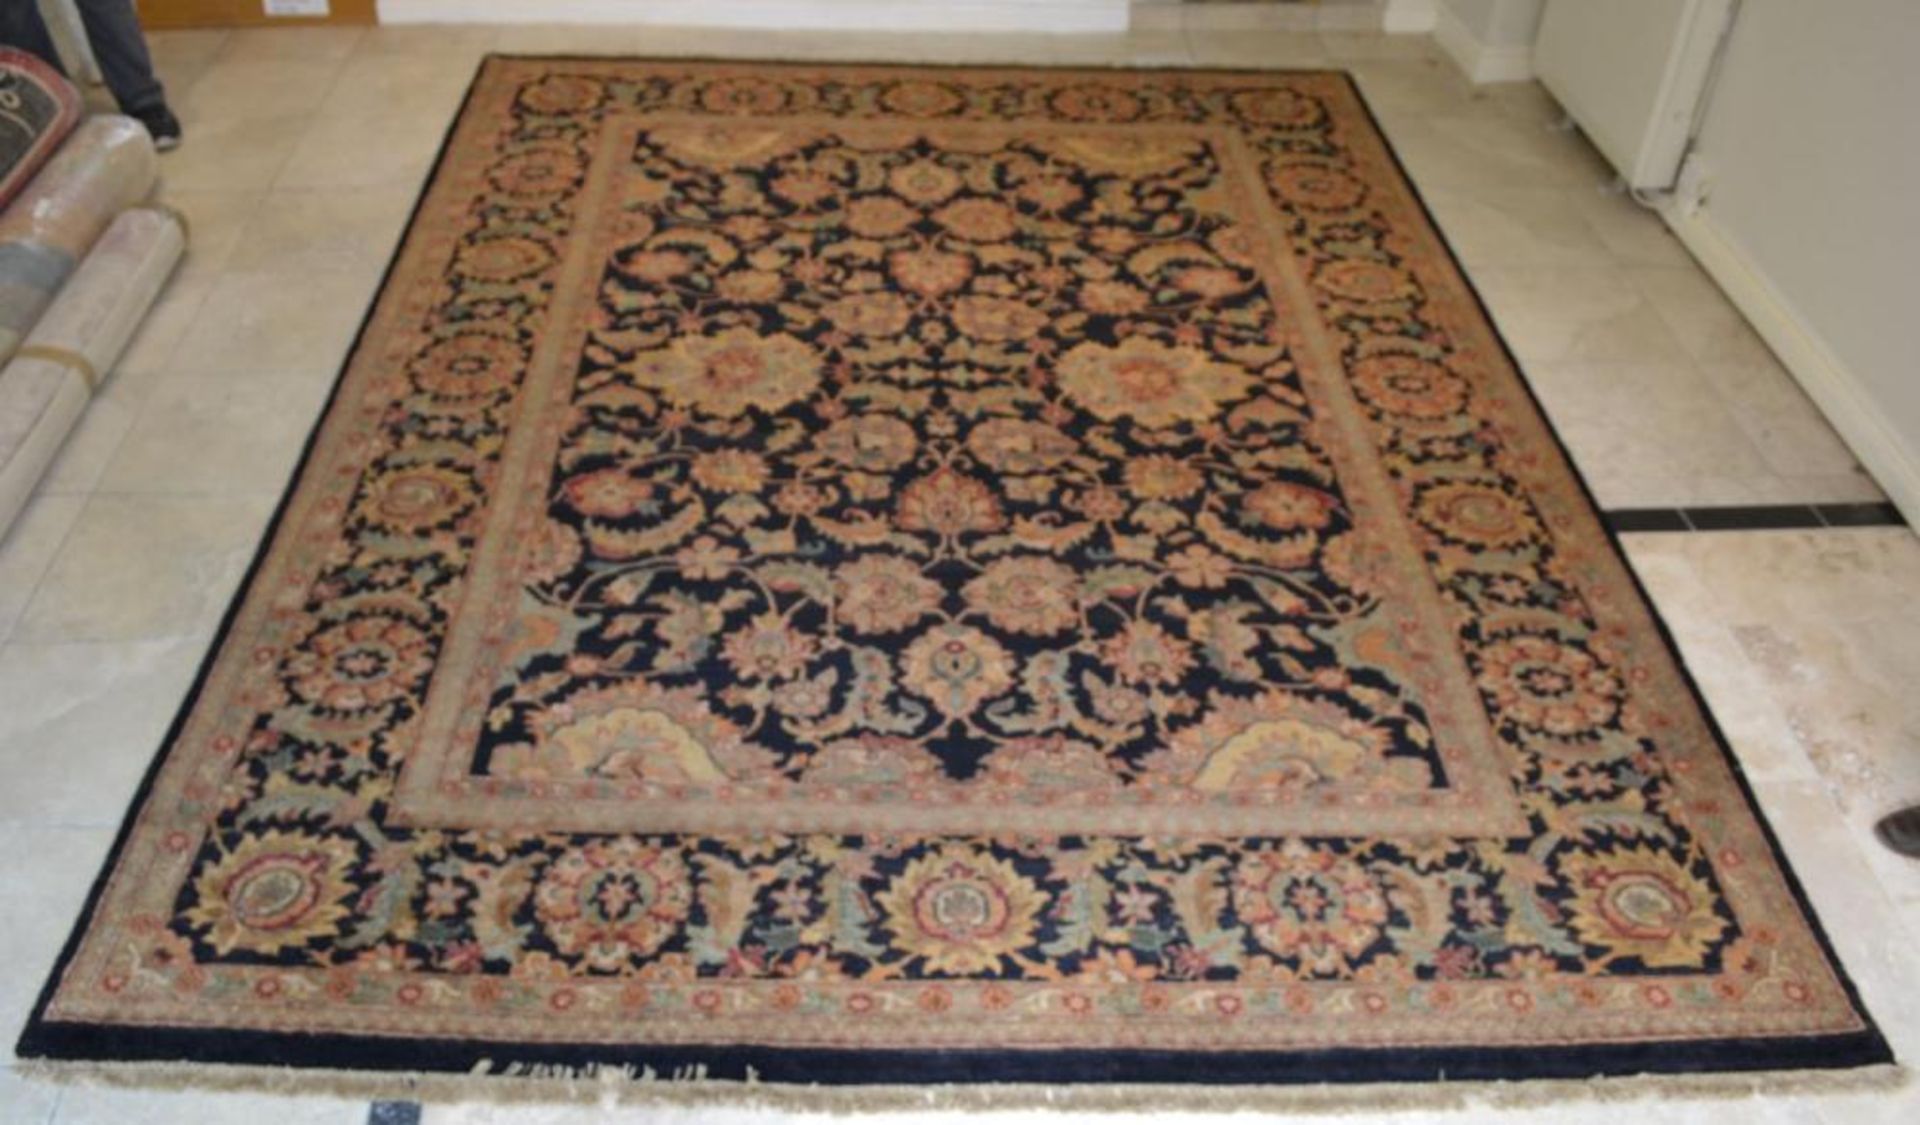 1 x Black Jaipur Handwoven Carpet - Made From Vegetable Dyed Handspun Wool - Dimensions: 367x277cm -